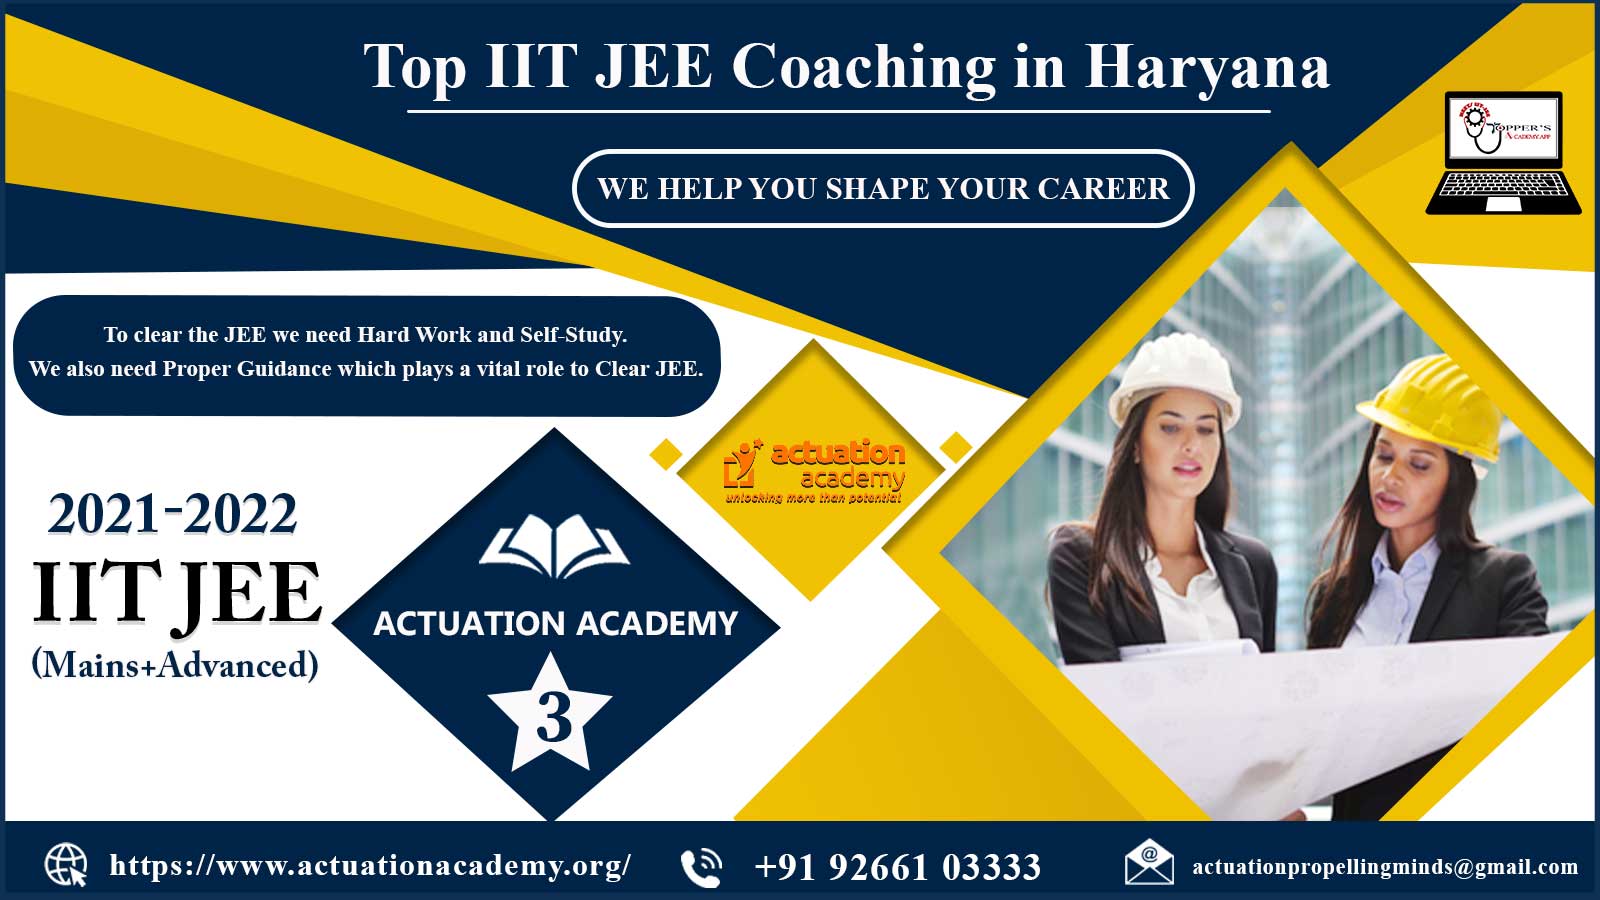 Actuation Academy in Haryana